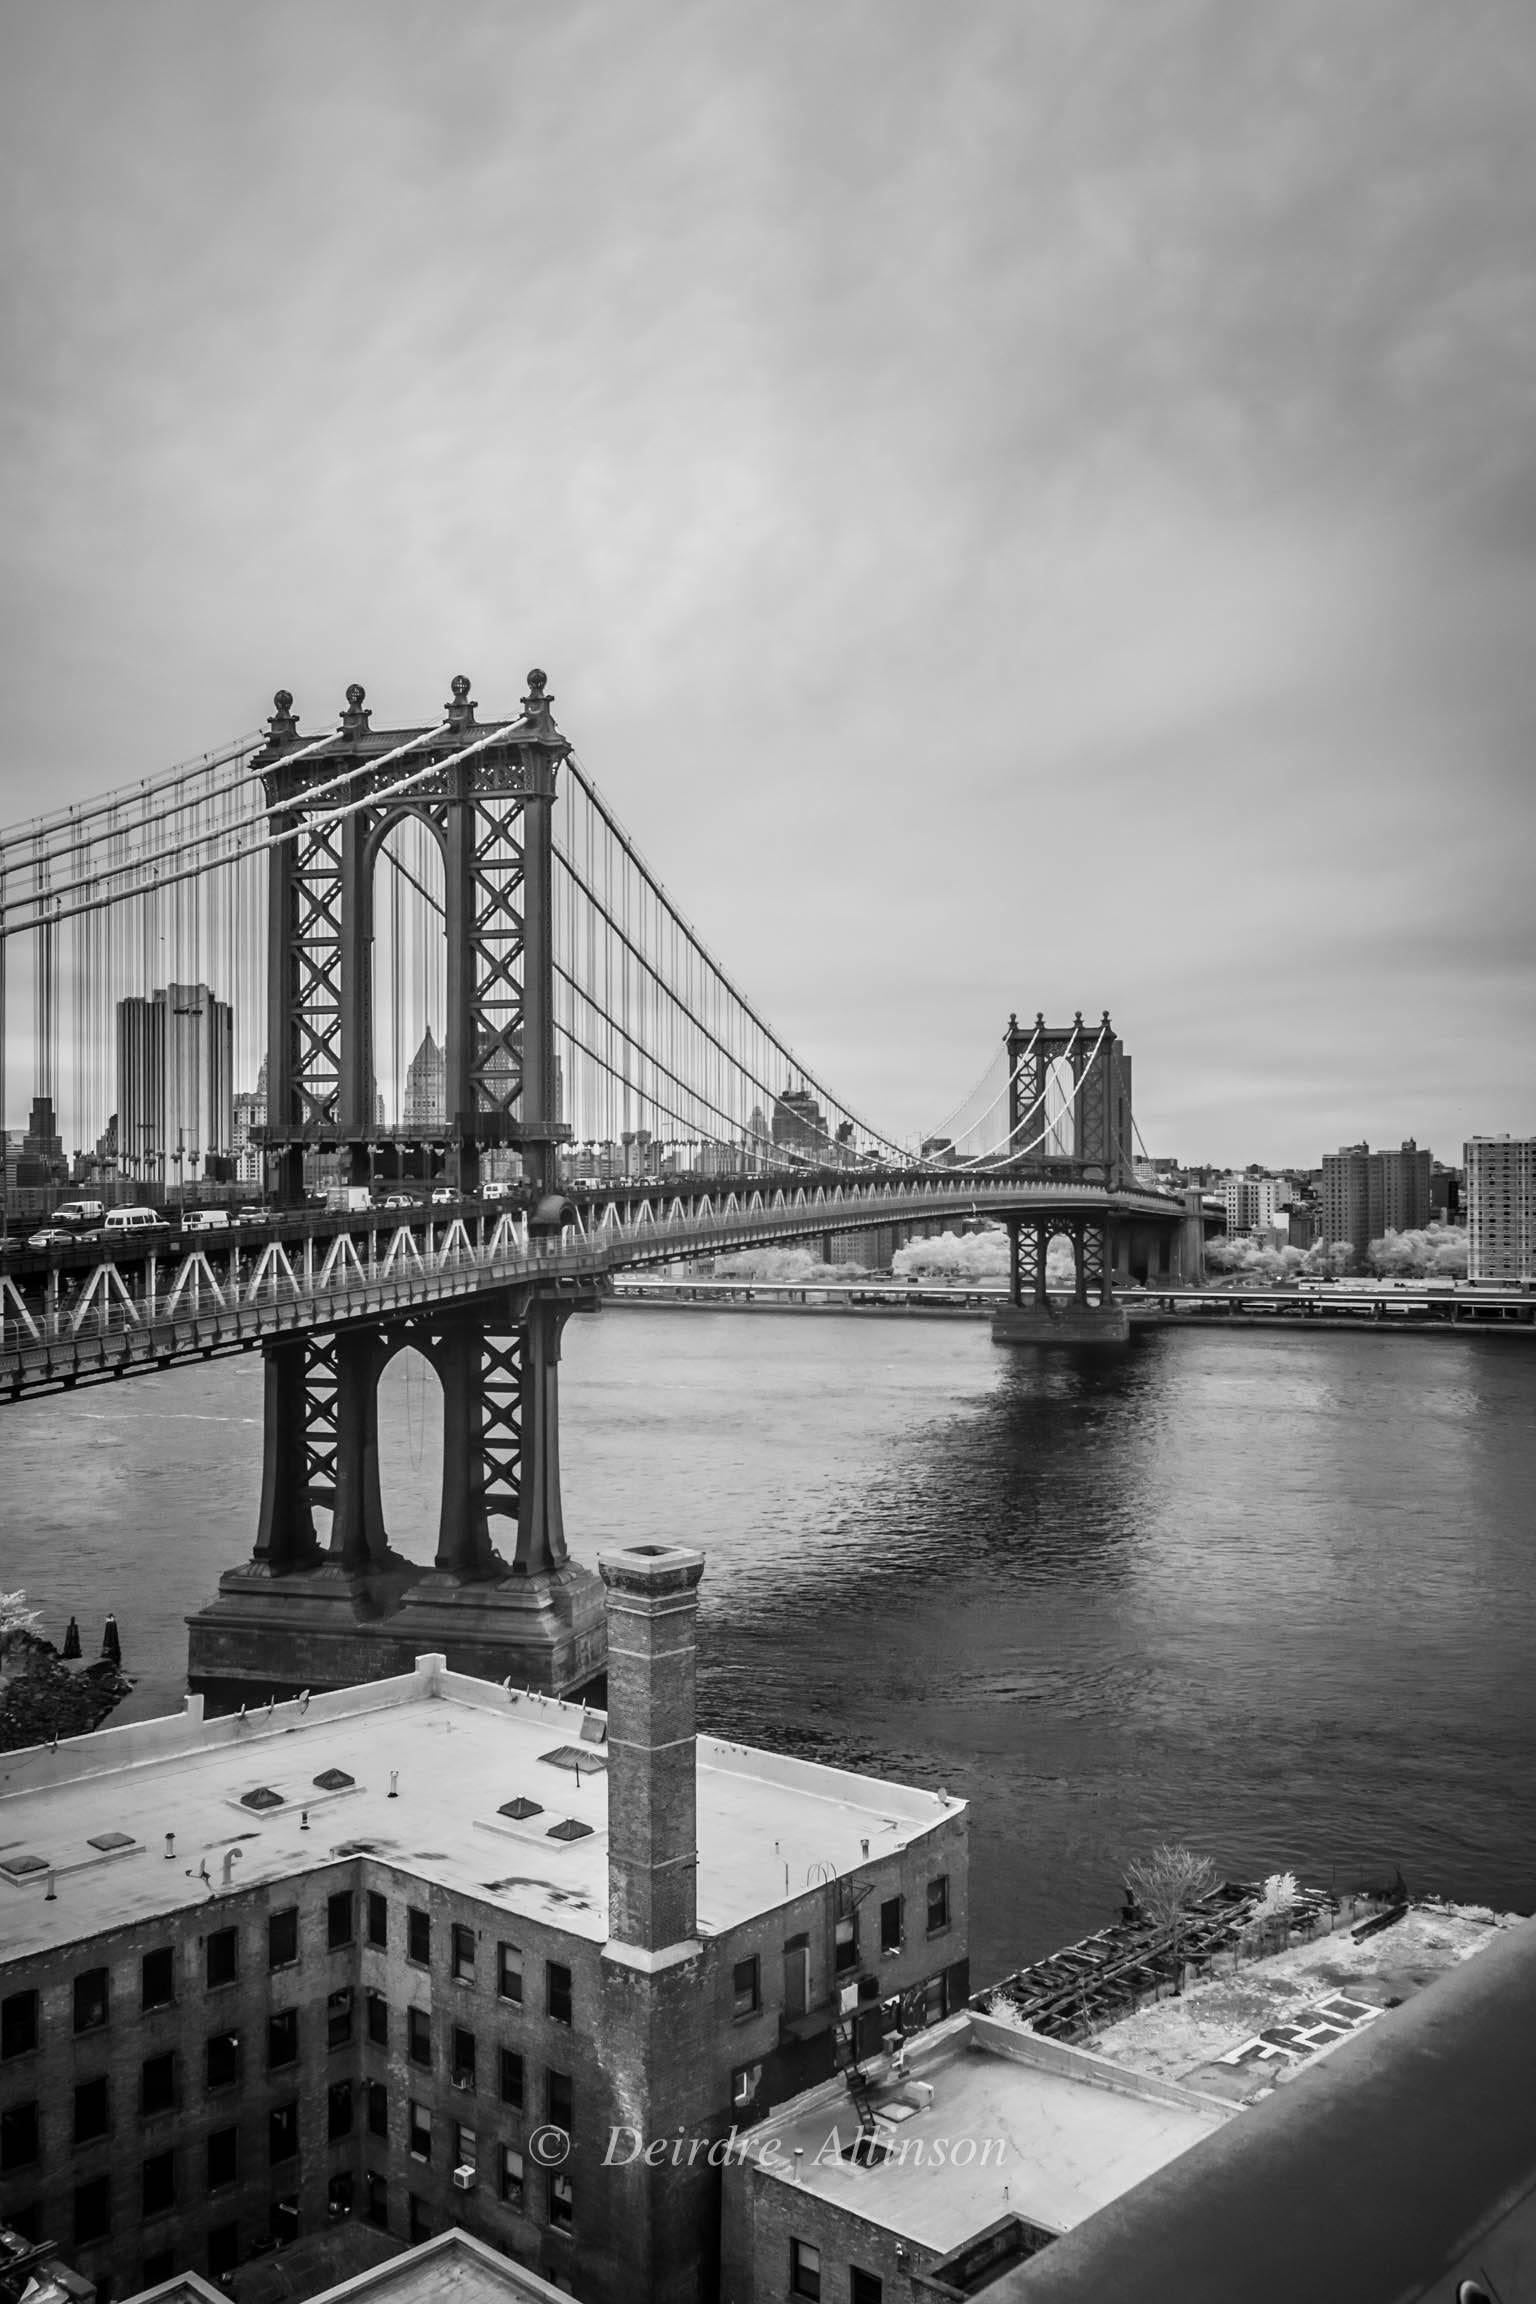 Deirdre Allinson Black and White Photograph - Connections. (Manhattan Bridge)